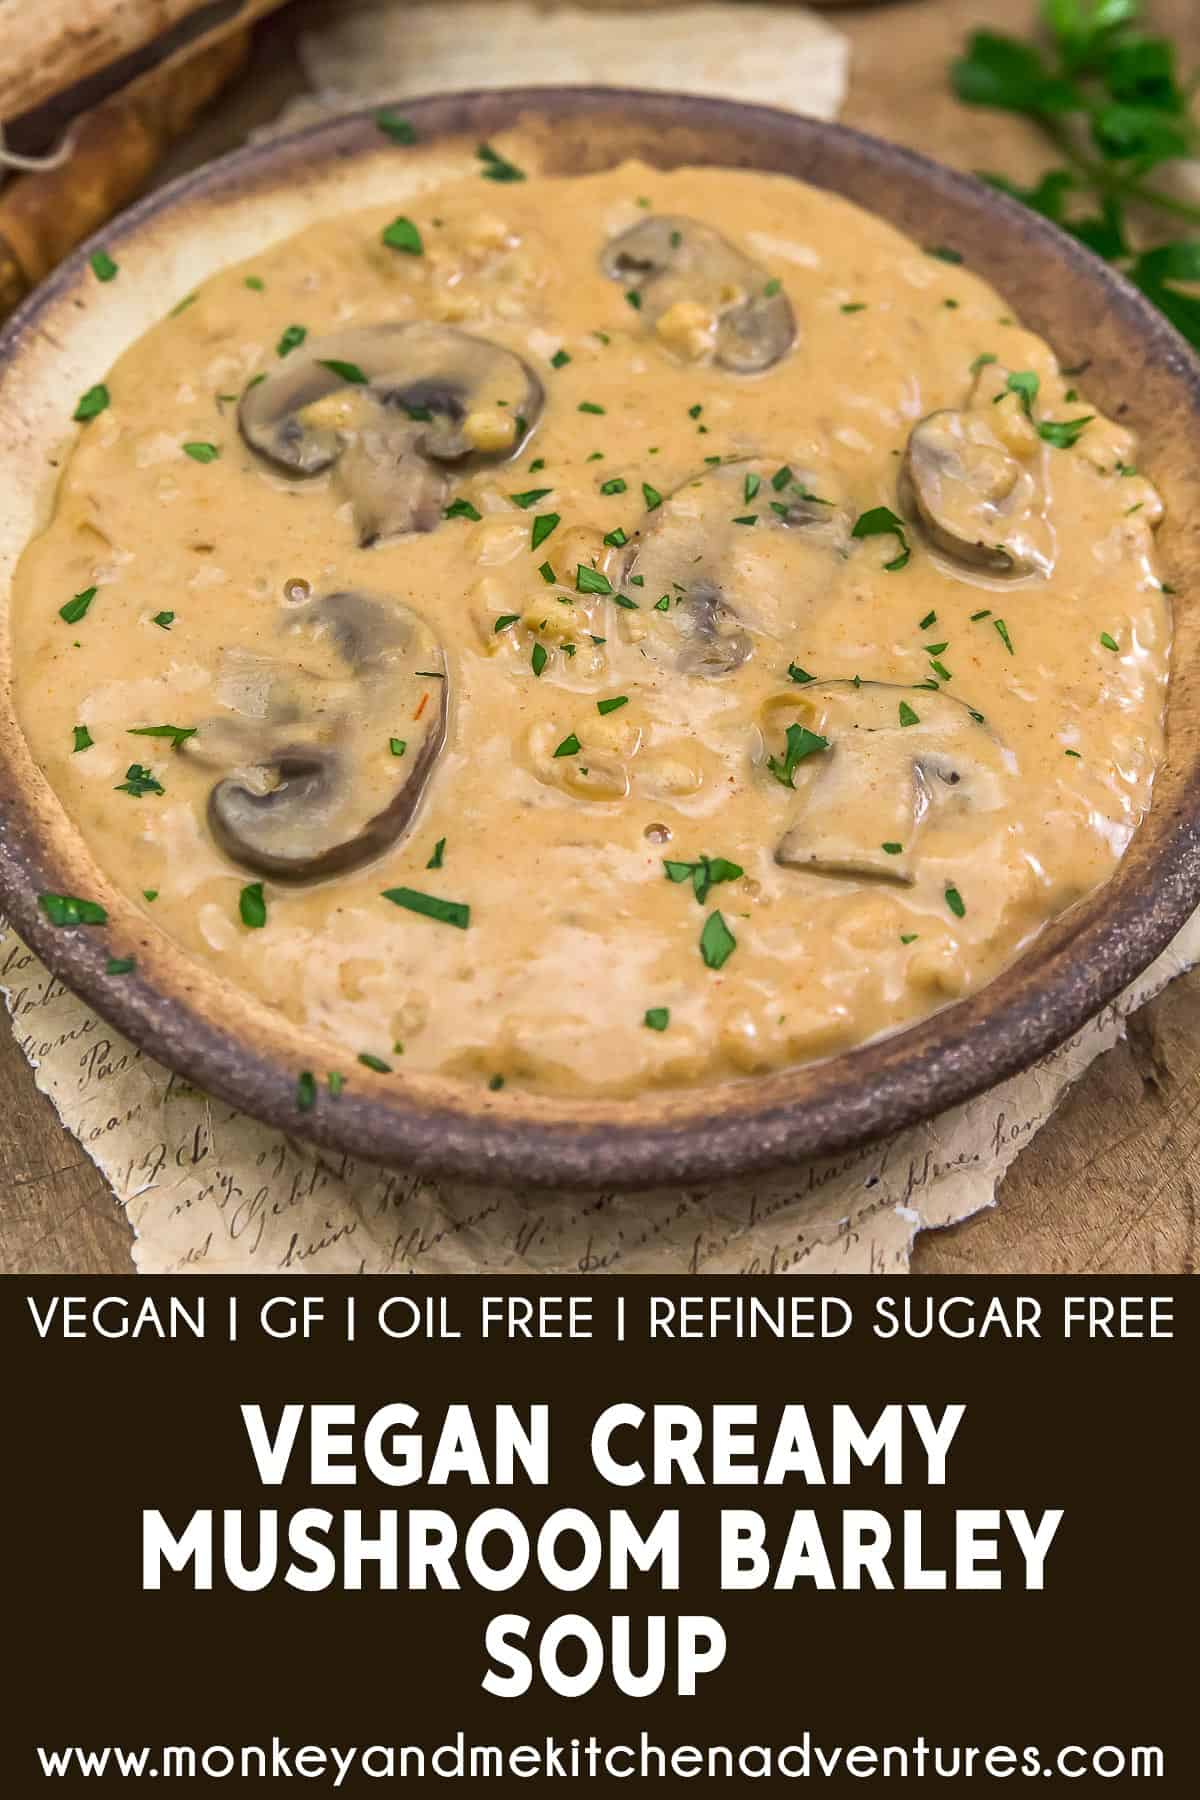 Vegan Creamy Mushroom Barley Soup with text description